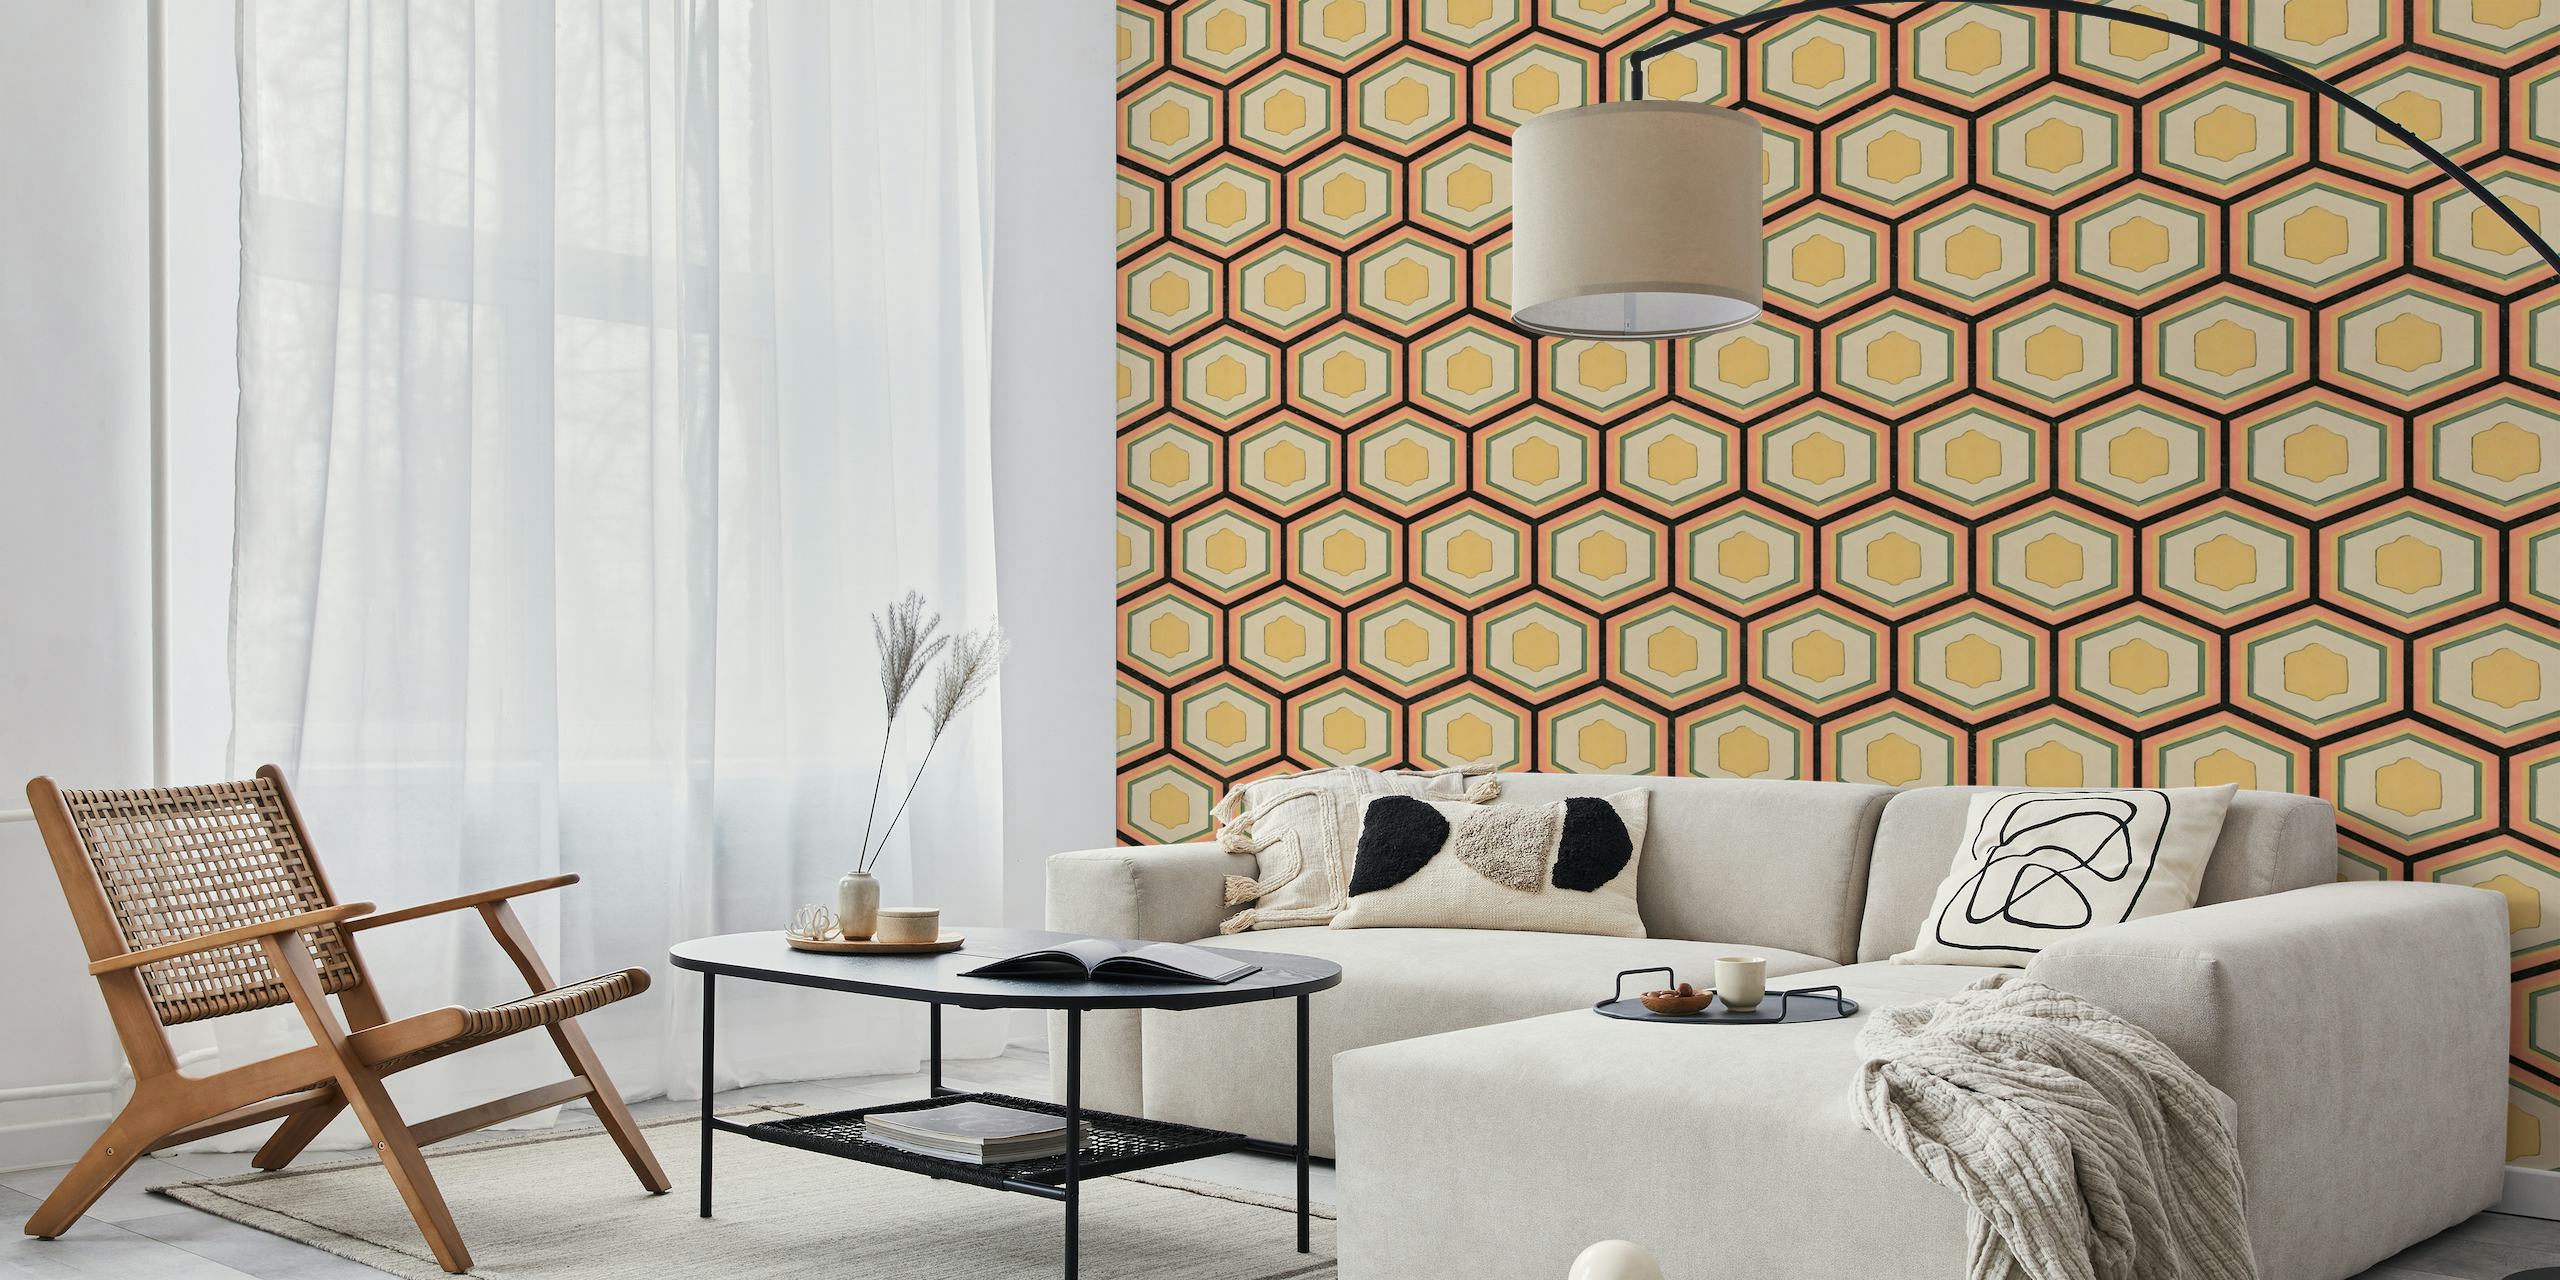 Vintage Japanese honeycomb pattern wallpaper in warm hues